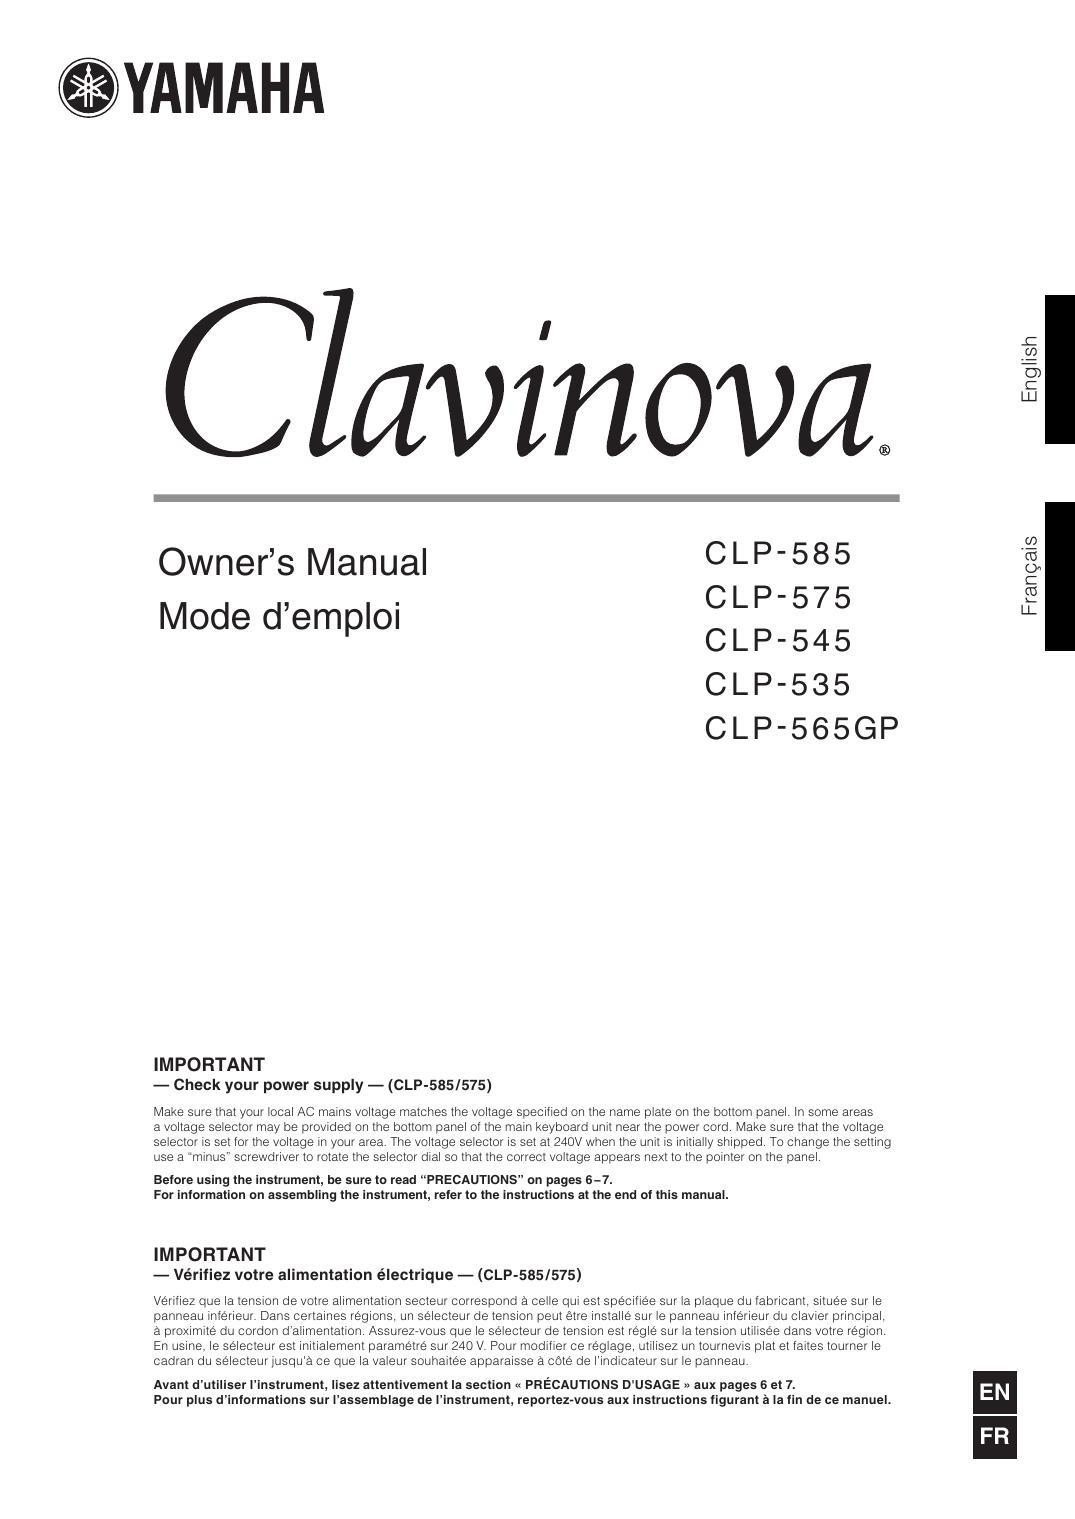 clavinova-2-owners-manual-clp-585-clp-575.pdf